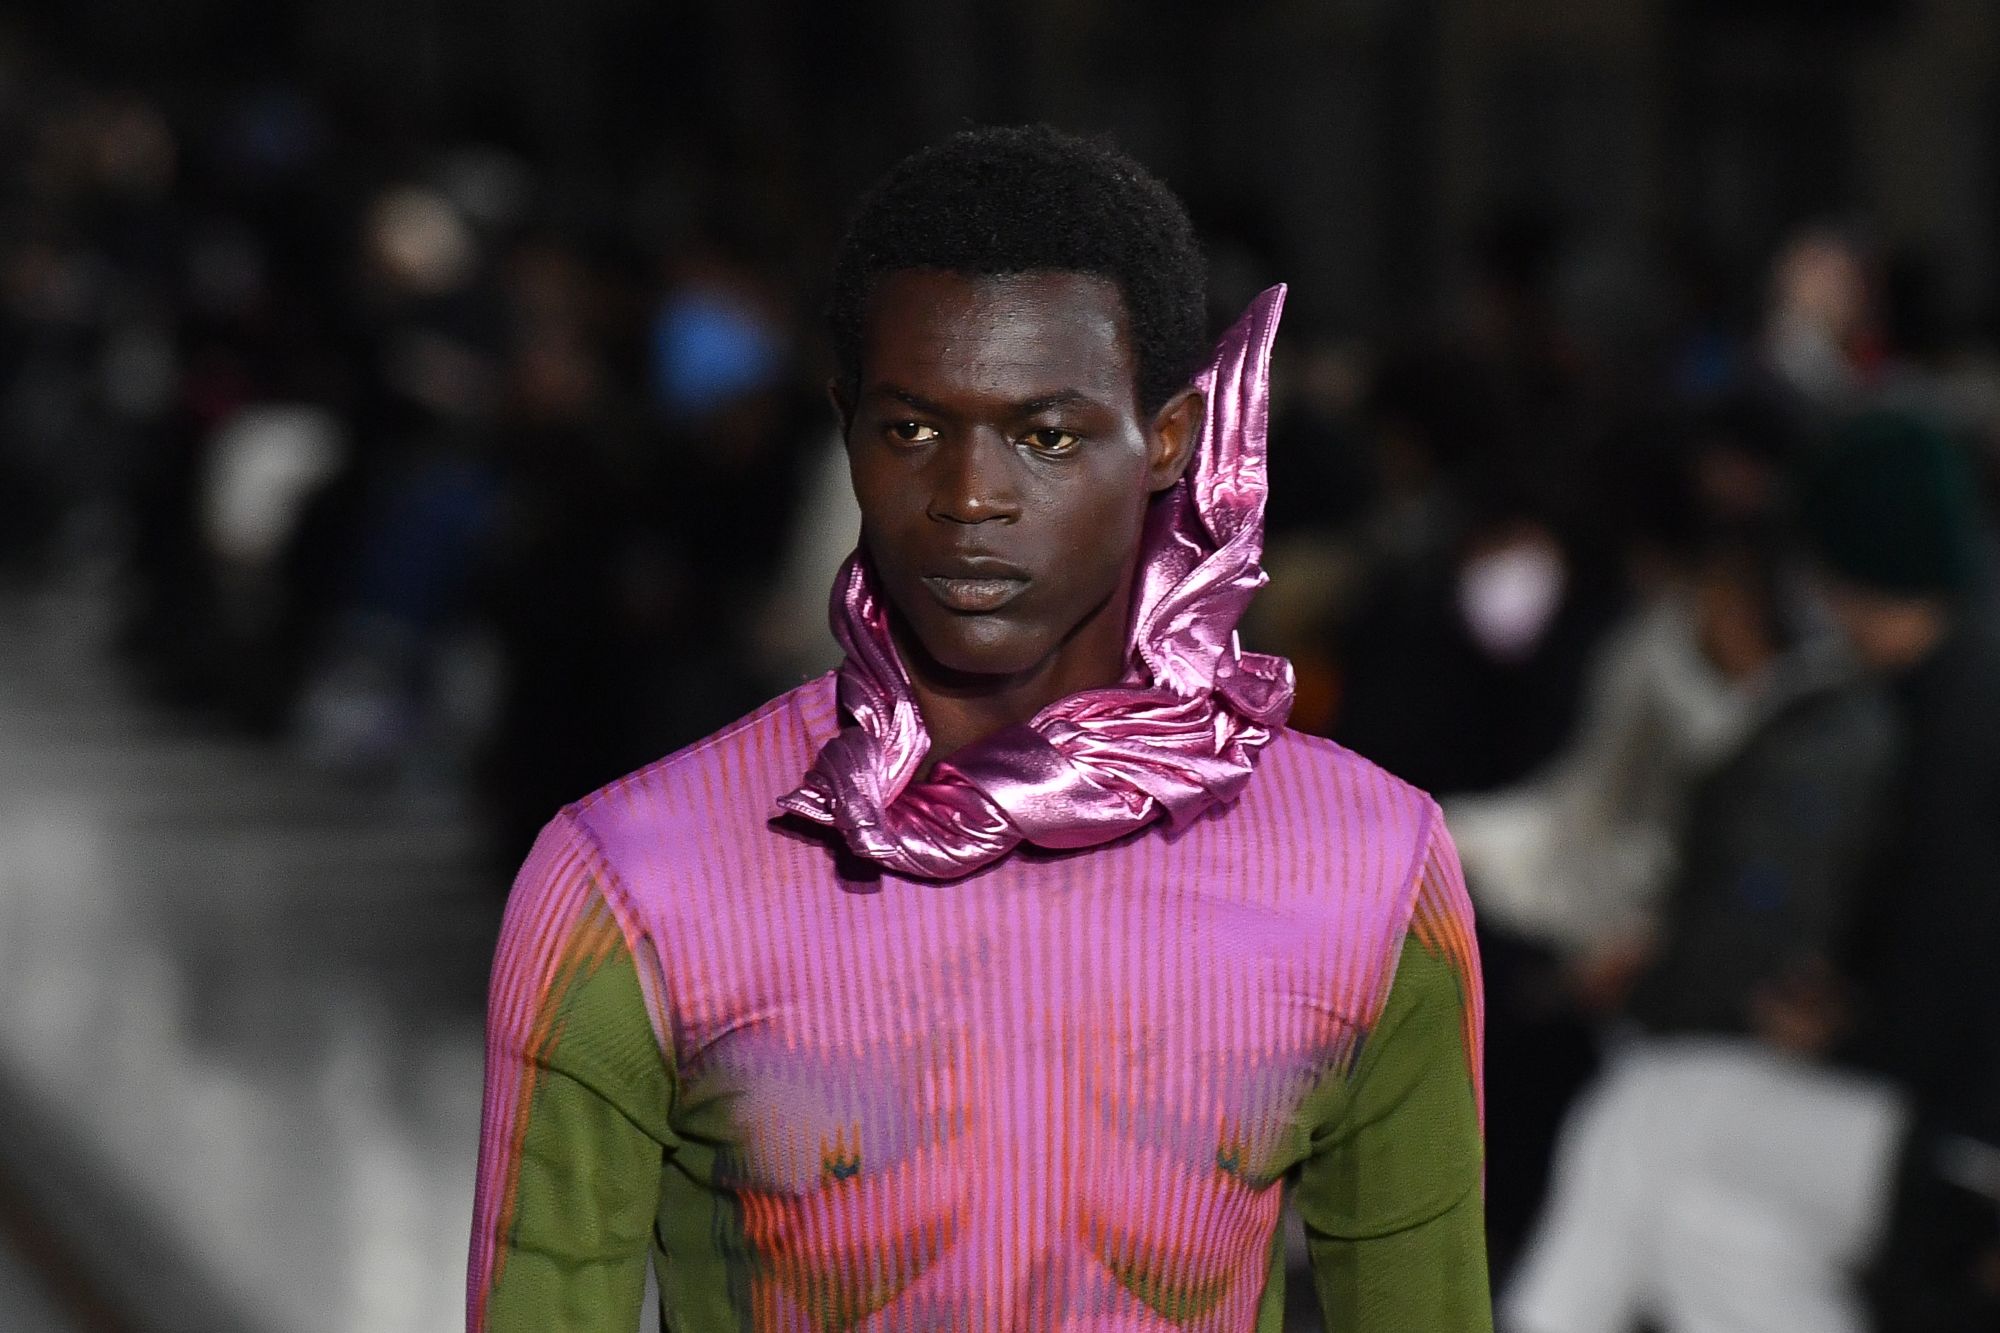 Paris Fashion Week 2023 Menswear Round-Up: LV, Dior, and more